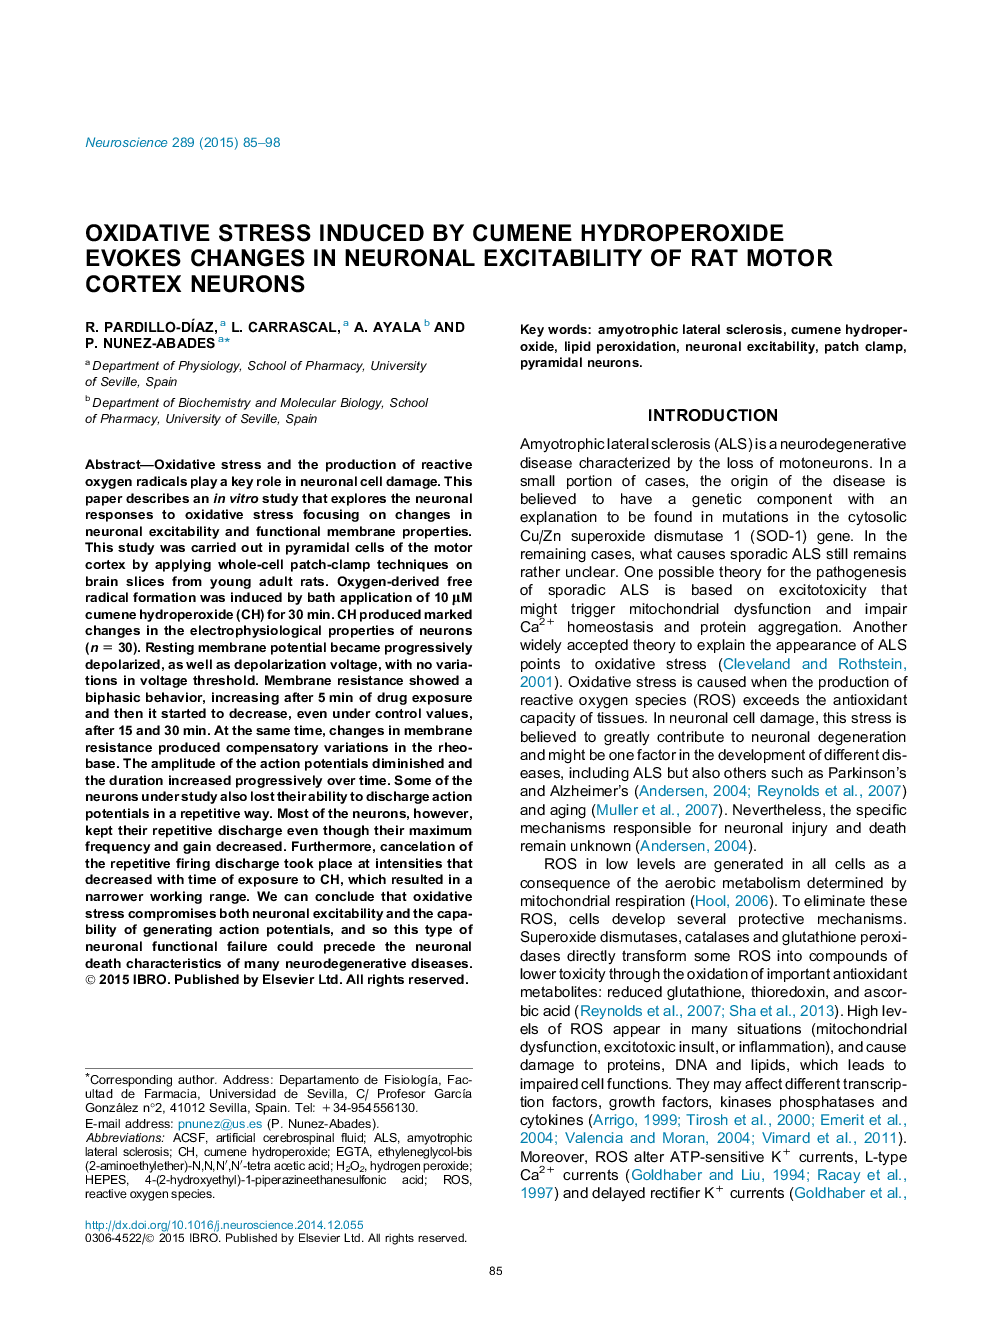 Oxidative stress induced by cumene hydroperoxide evokes changes in neuronal excitability of rat motor cortex neurons